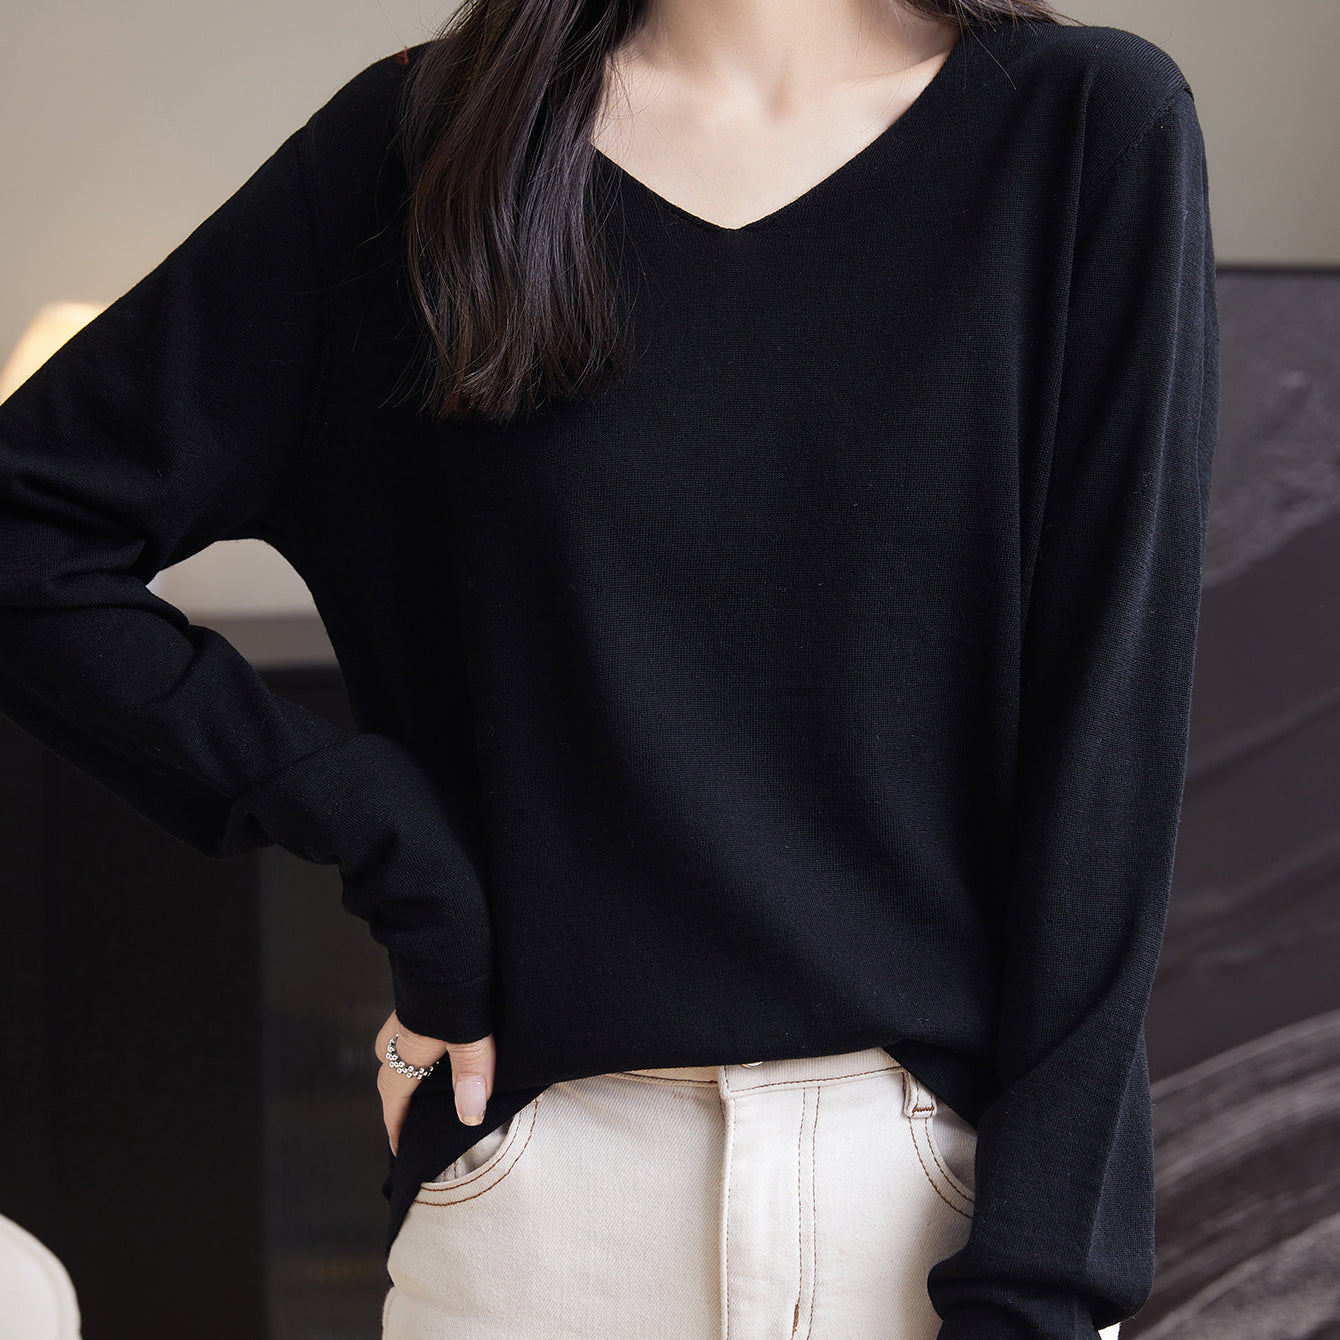 Chanyarn Women's 100% Merino Wool Base Layer Shirt Tops V Neck Long Sleeve Travel Hiking Tee T Shirt Pullover Sweater